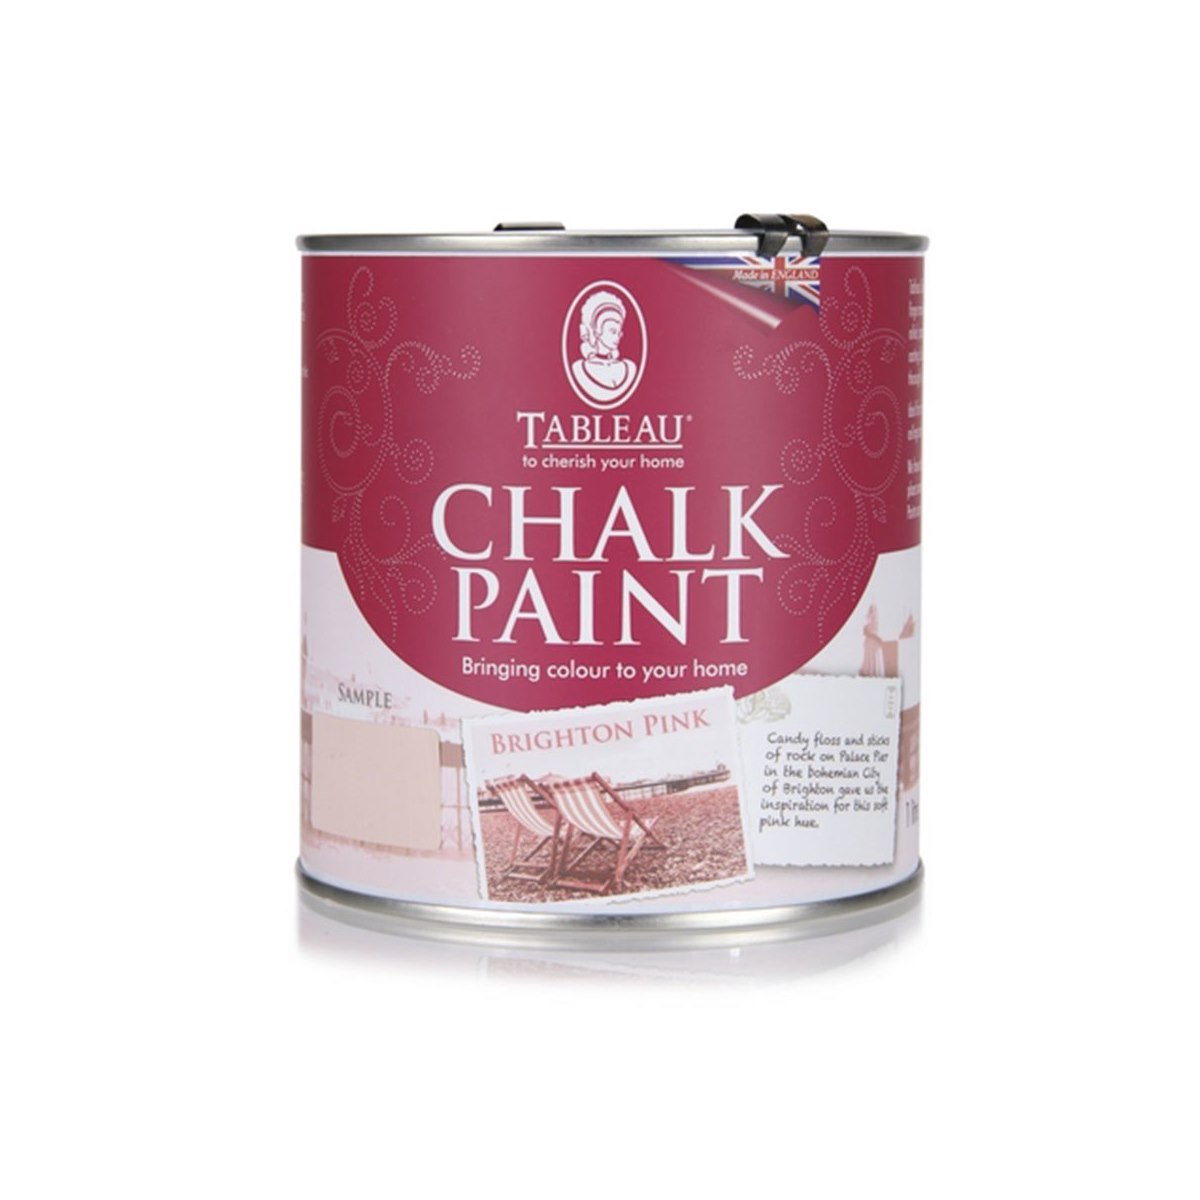 Tableau Chalk Paint Brighton Pink